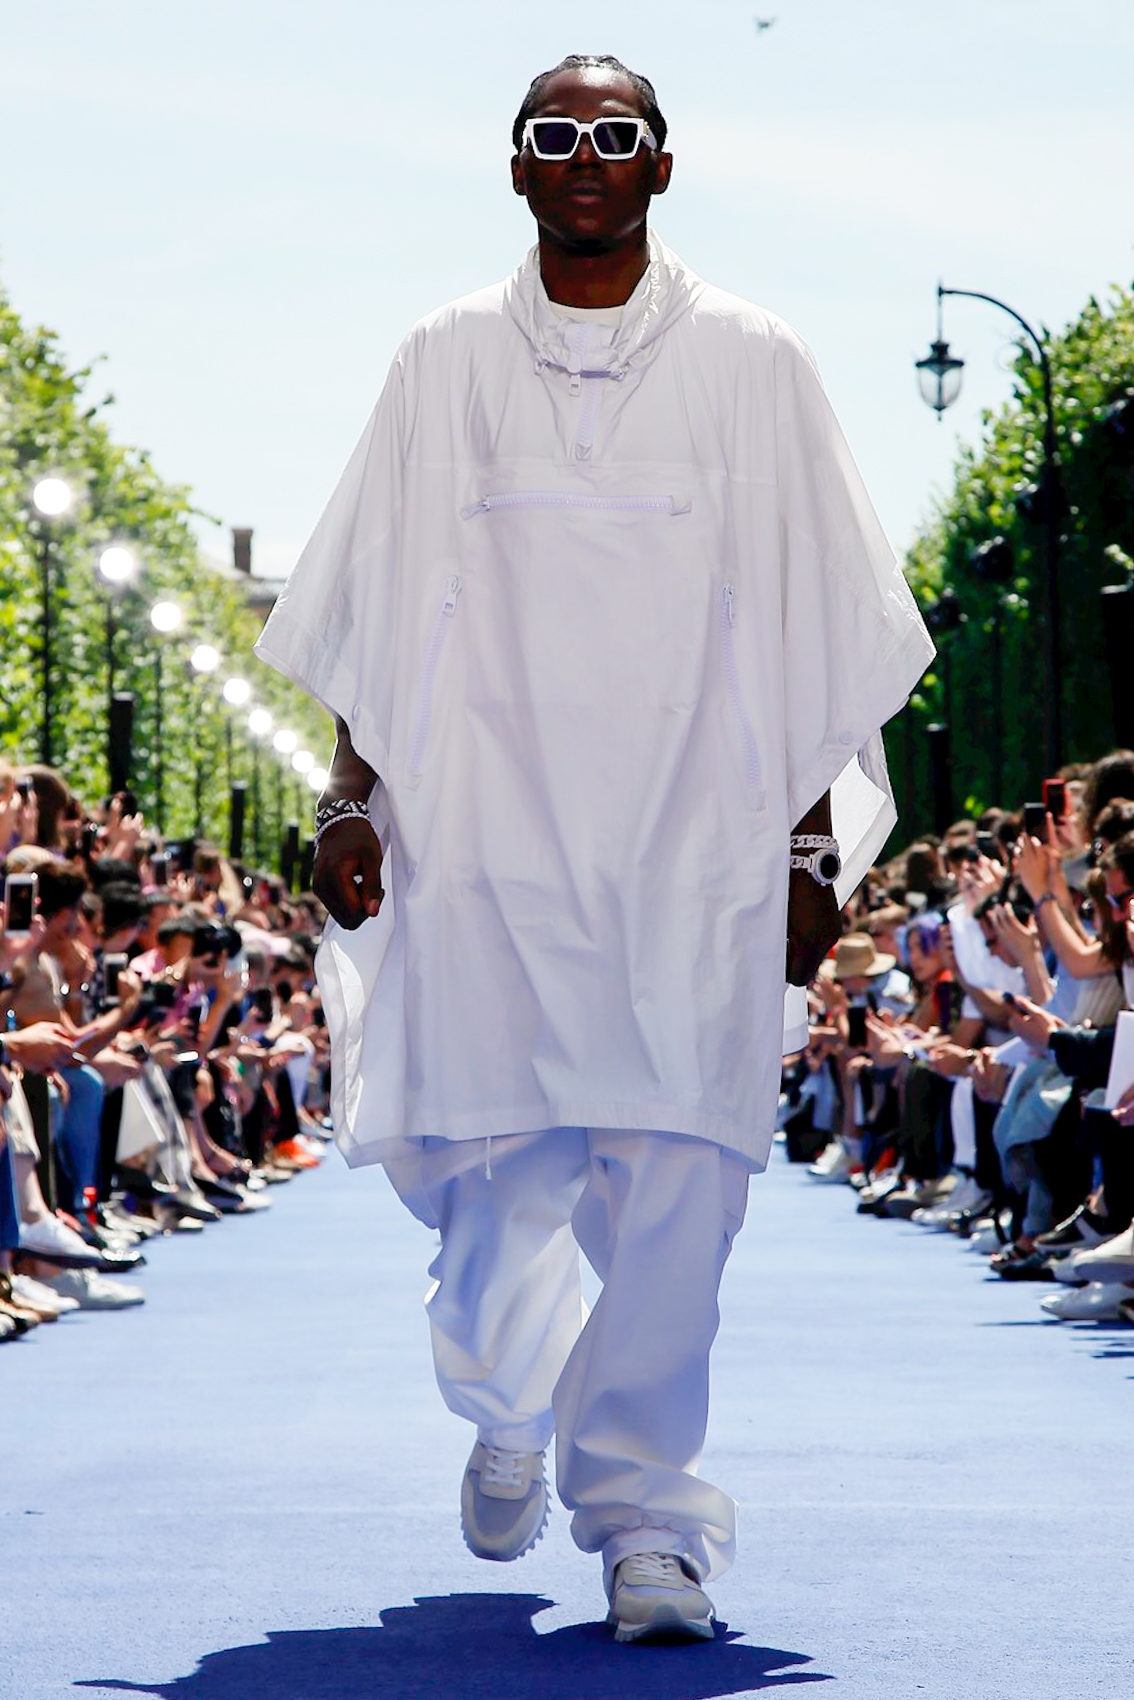 High Heel shoes - StreetStyle at Louis Vuitton - Paris Fashion Week Men  Spring Summer 2019 - Palais Royal - Paris - France Stock Photo - Alamy